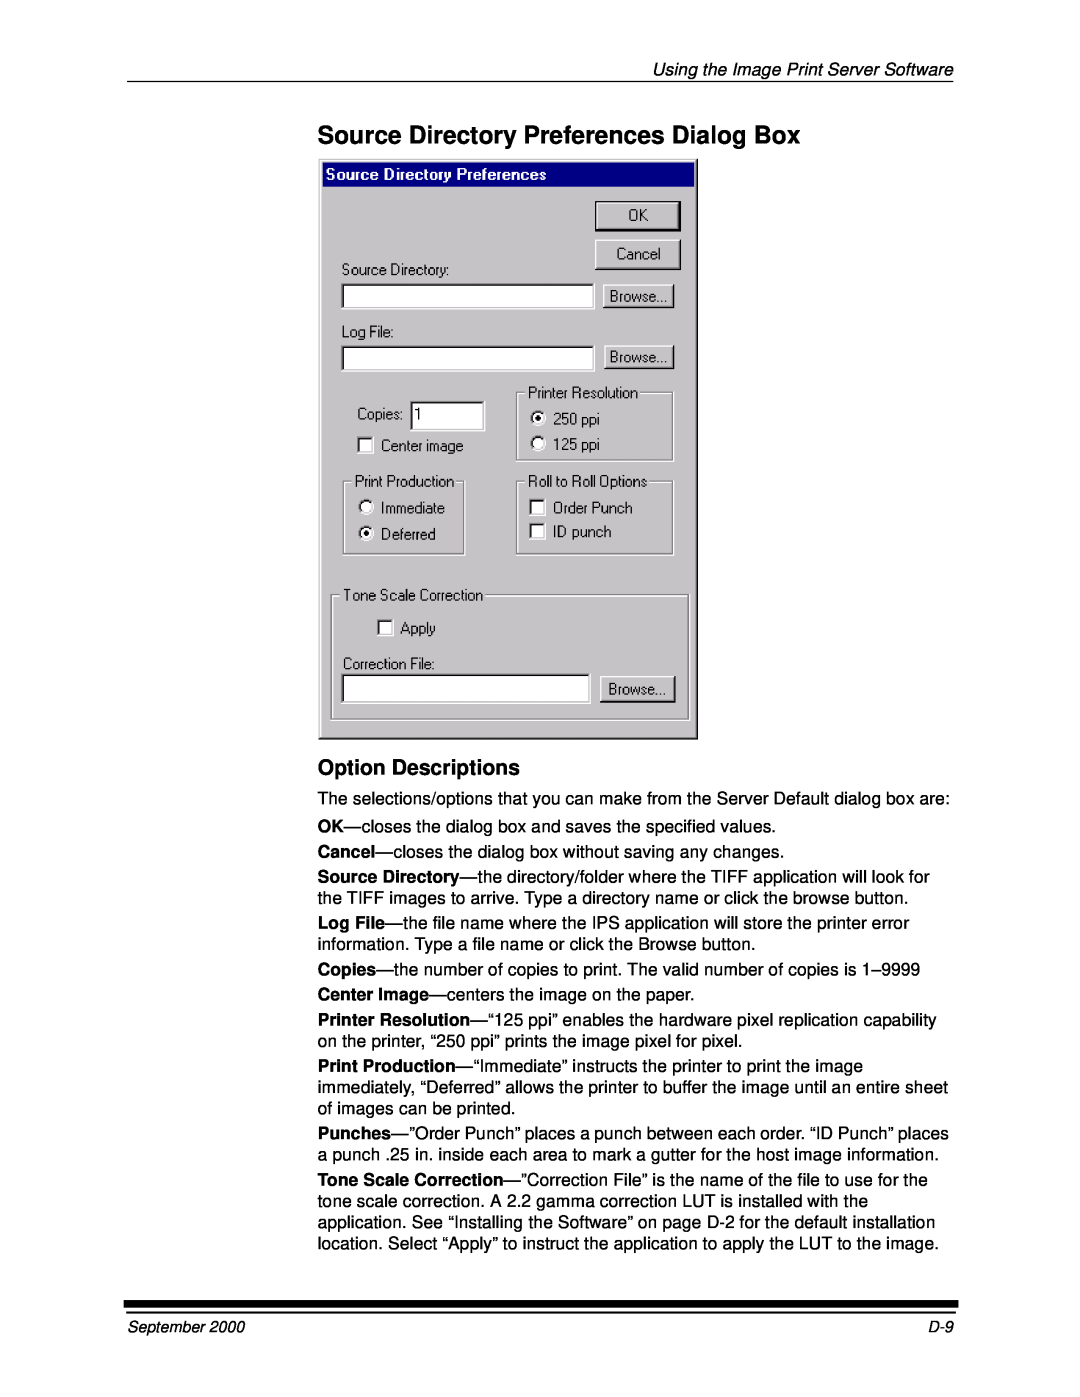 Kodak 20R manual Source Directory Preferences Dialog Box, Option Descriptions, Using the Image Print Server Software 